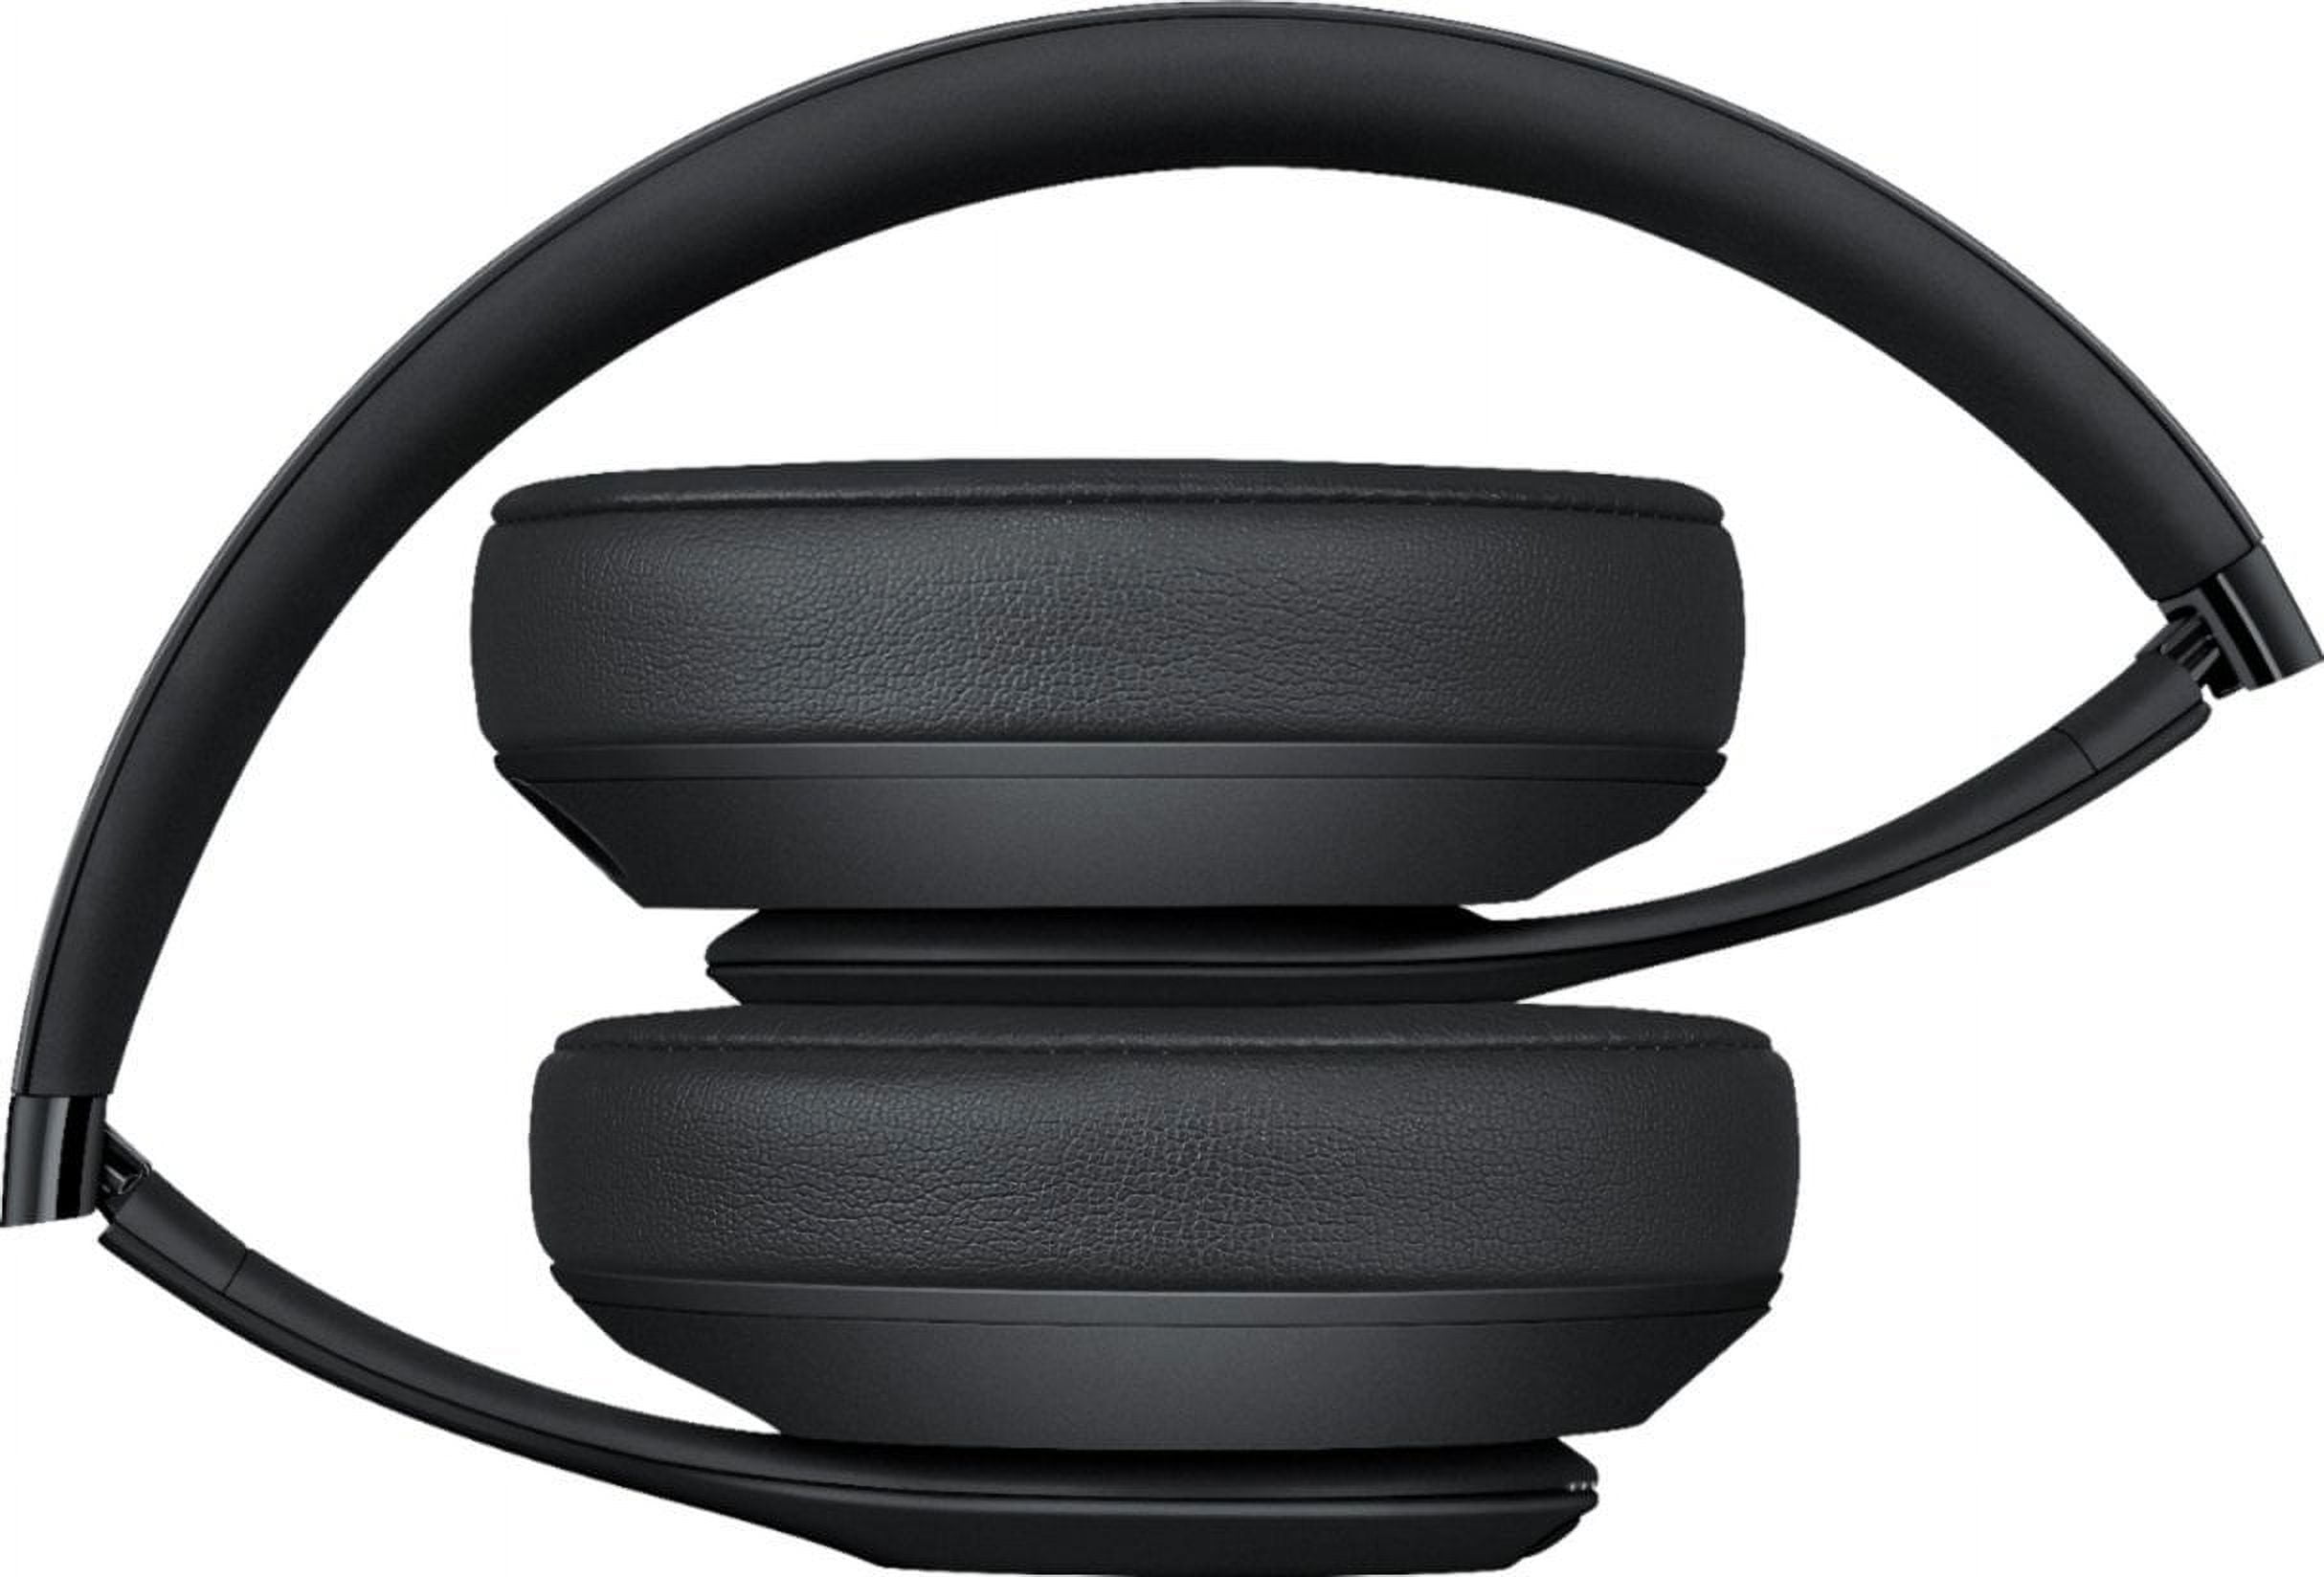 Beats Studio3 Wireless Noise Cancelling Headphones with Apple 